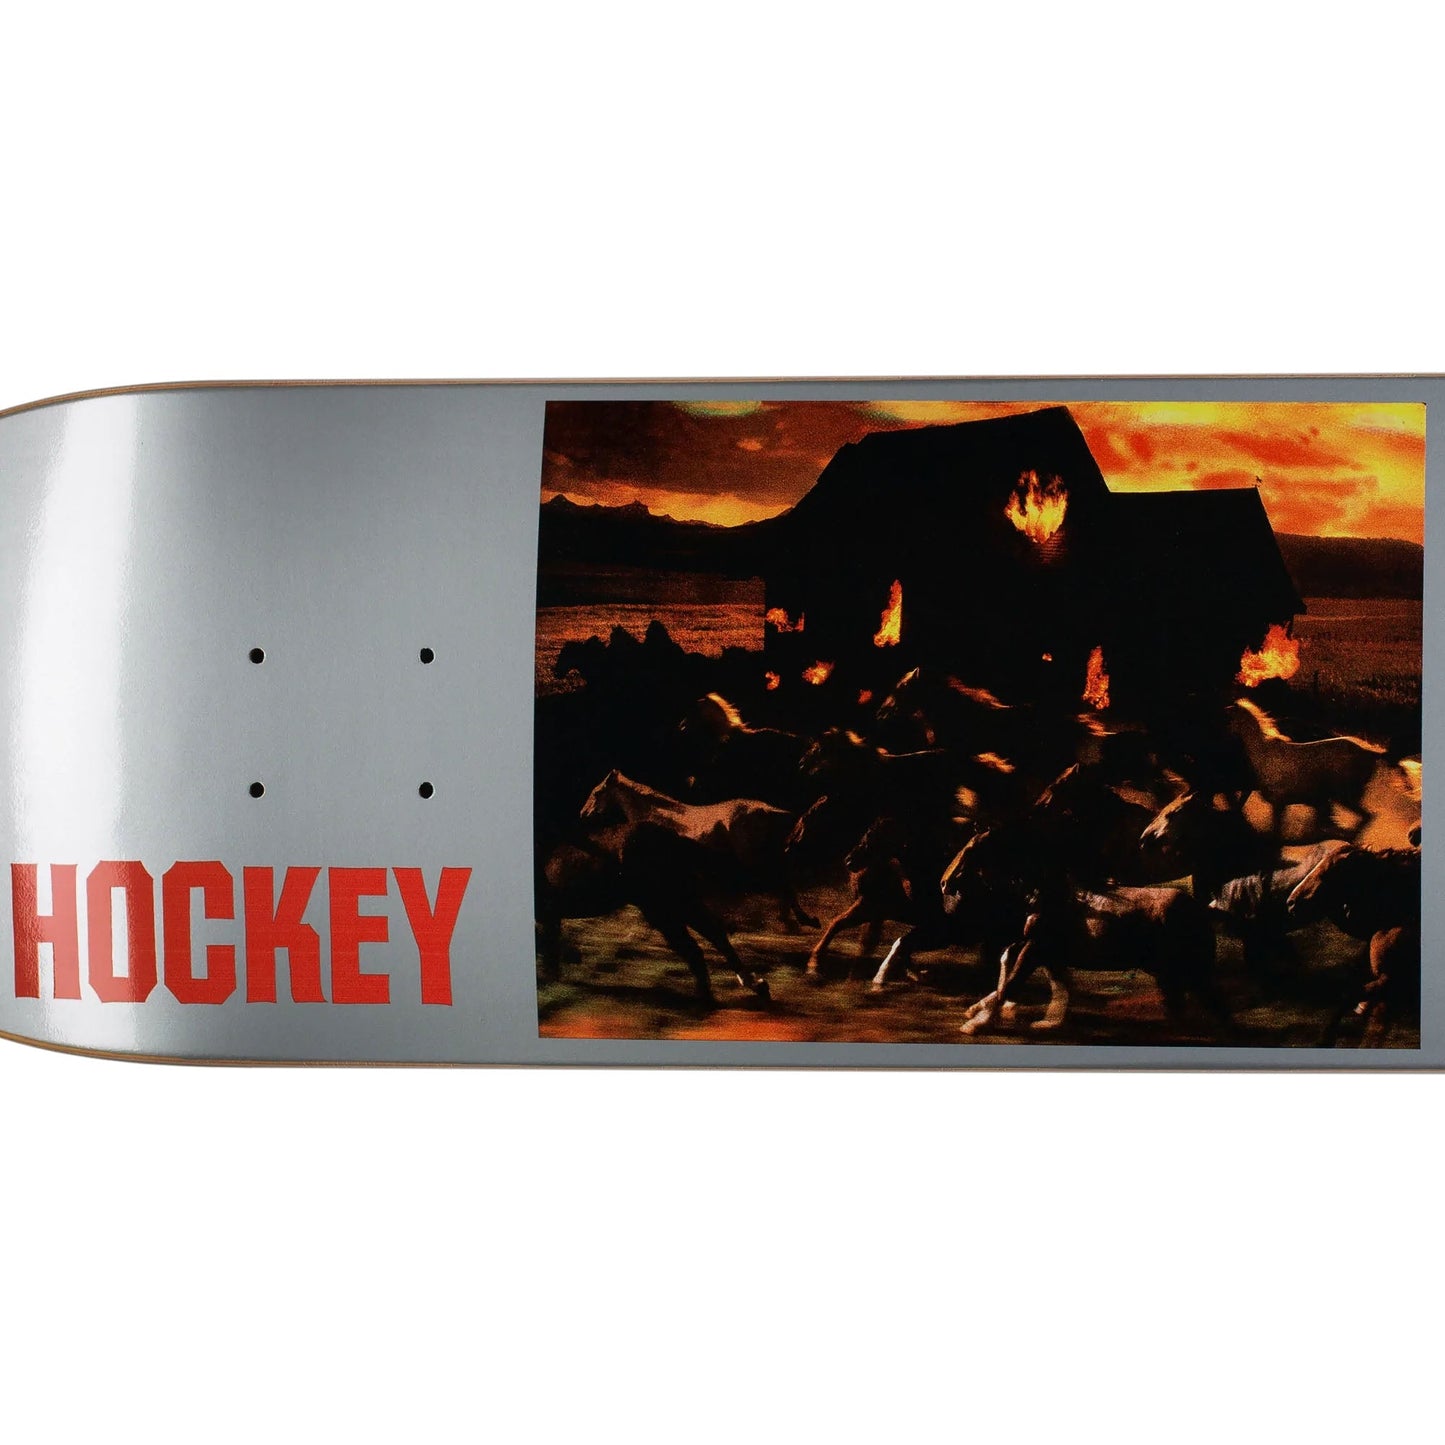 Hockey In Dreams Deck (8.0") - Tiki Room Skateboards - 3